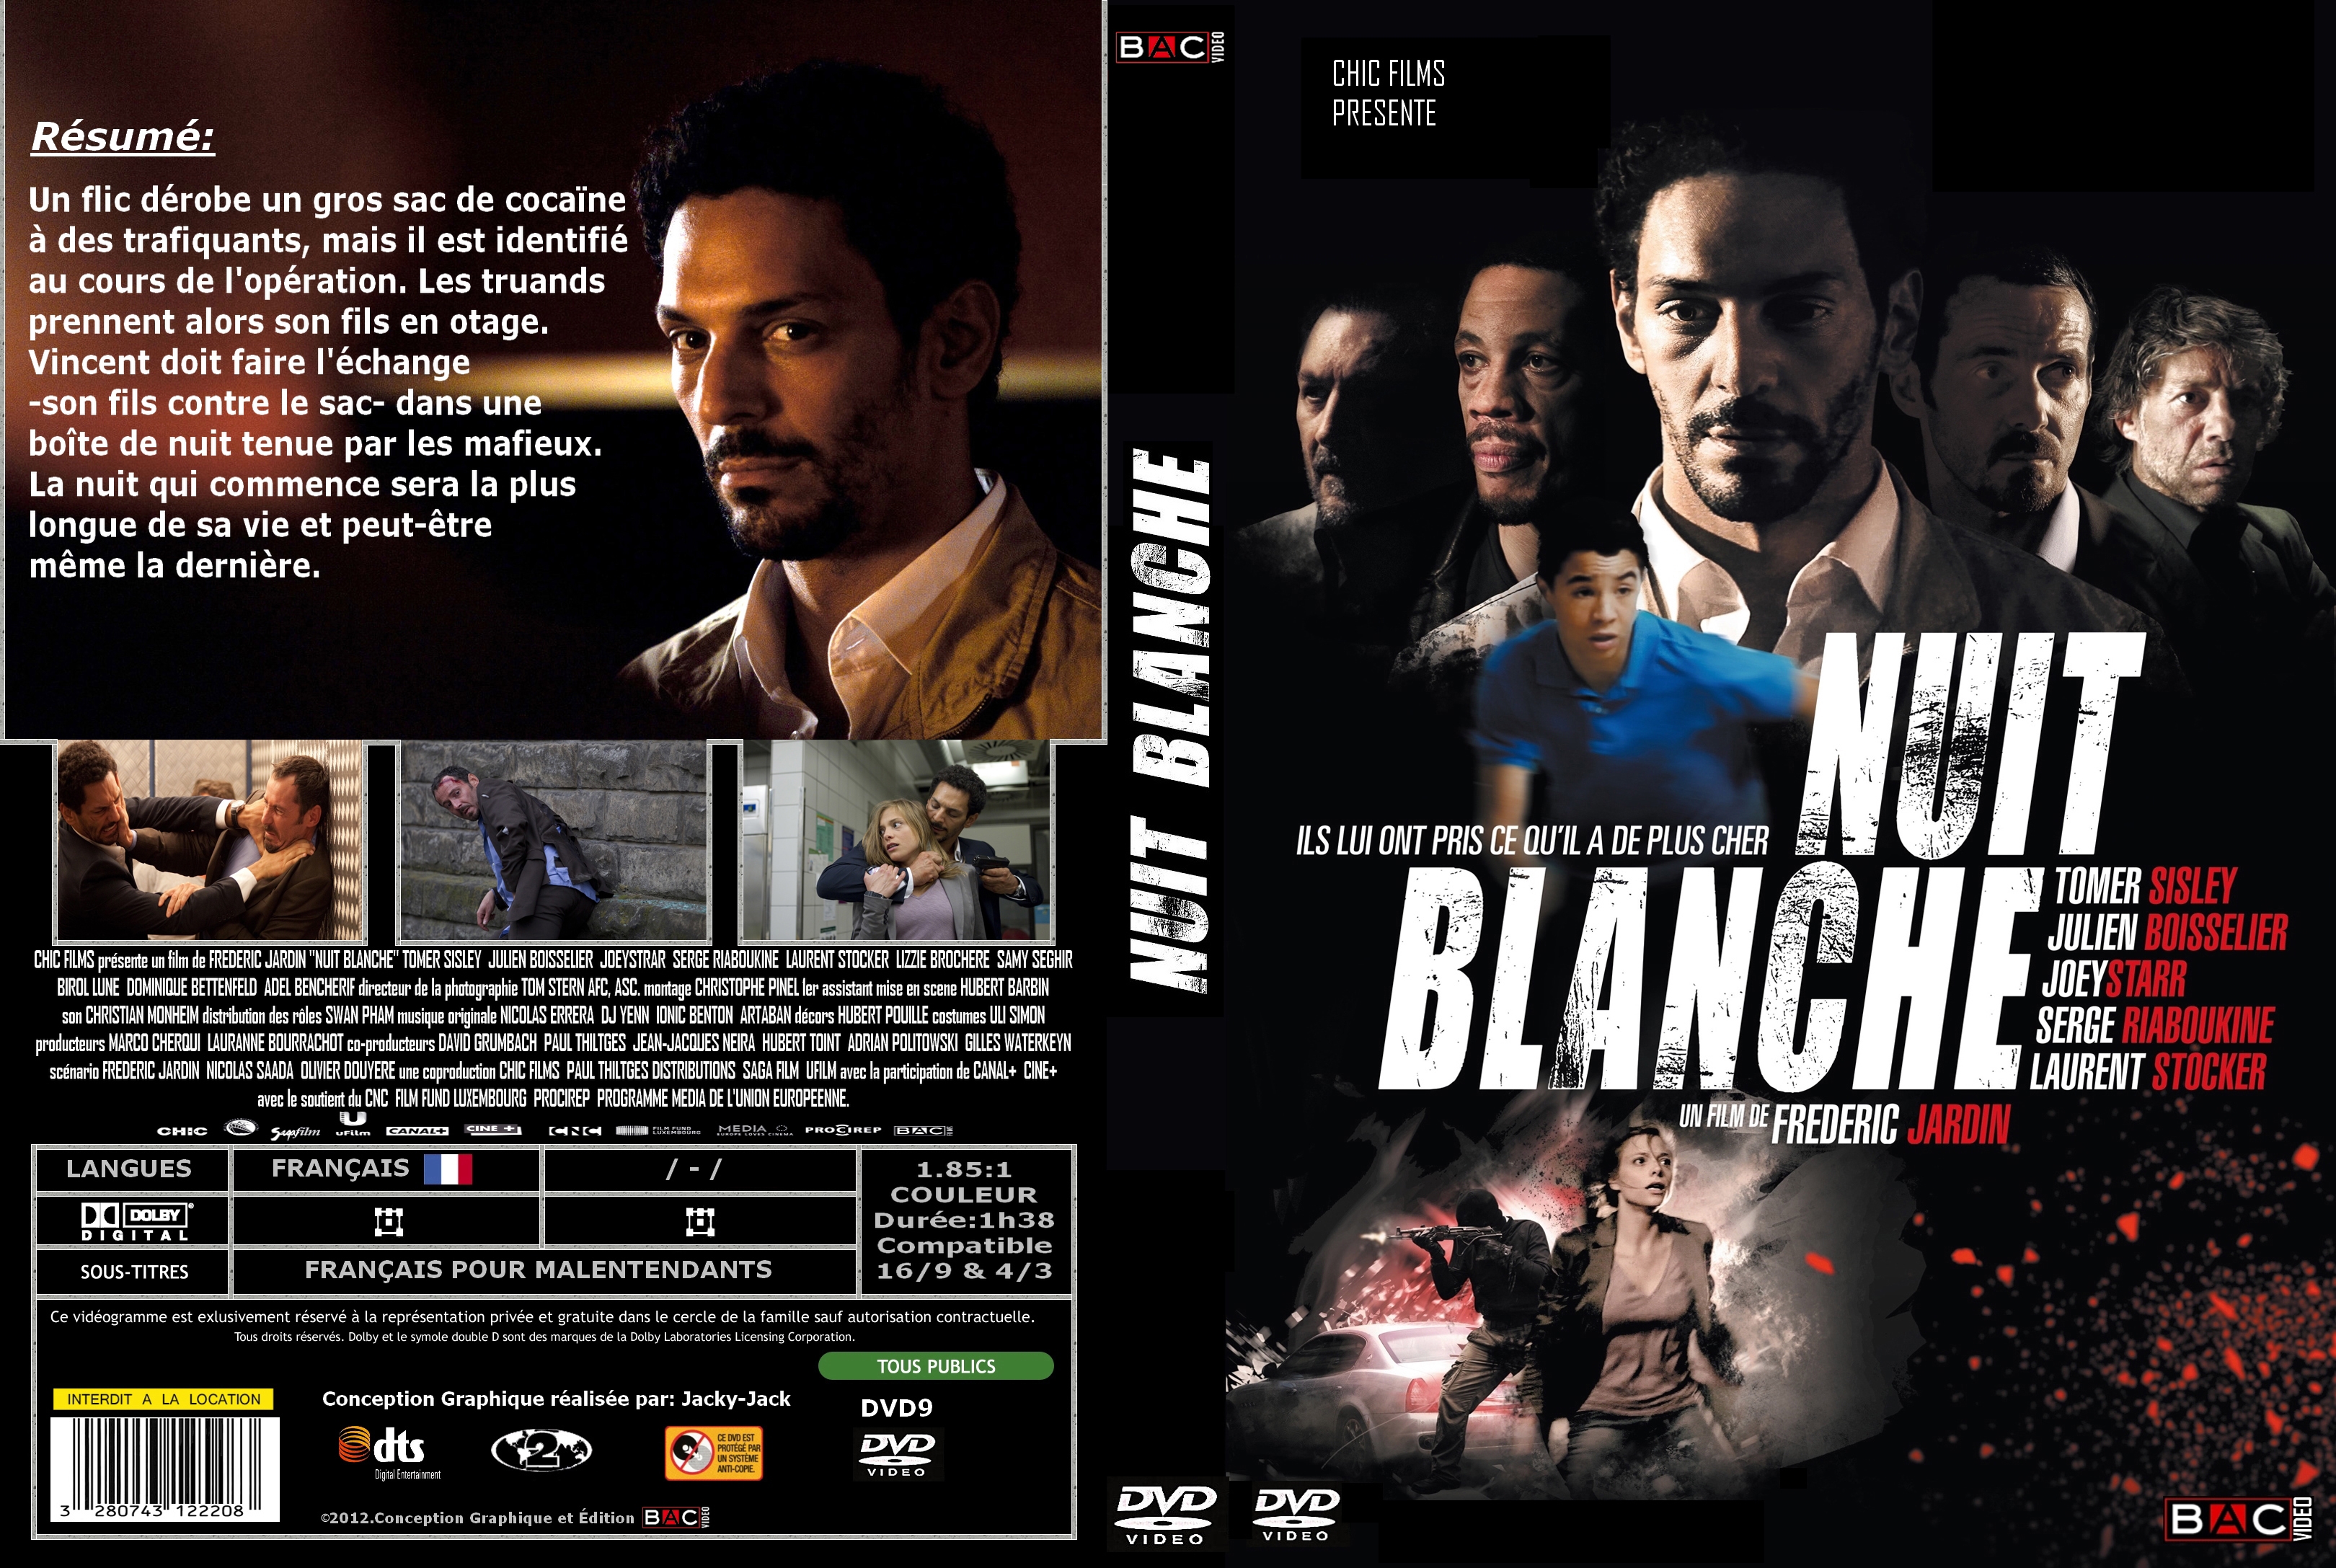 Jaquette DVD Nuit Blanche custom